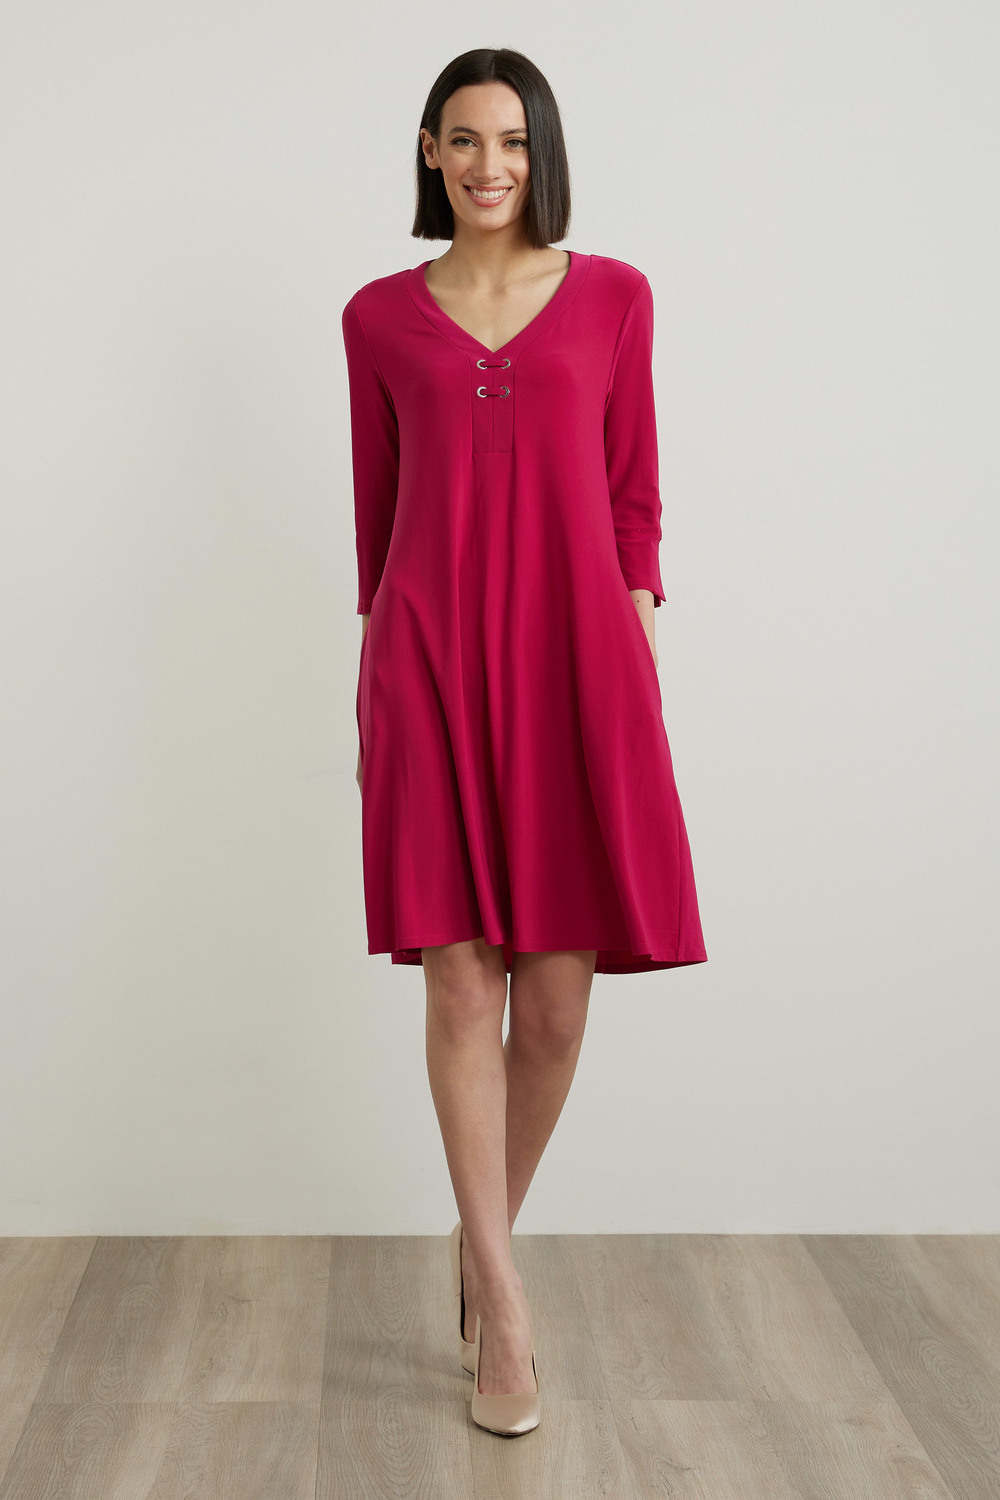 Joseph Ribkoff Fit & Flare Dress Style 213361. Dahlia